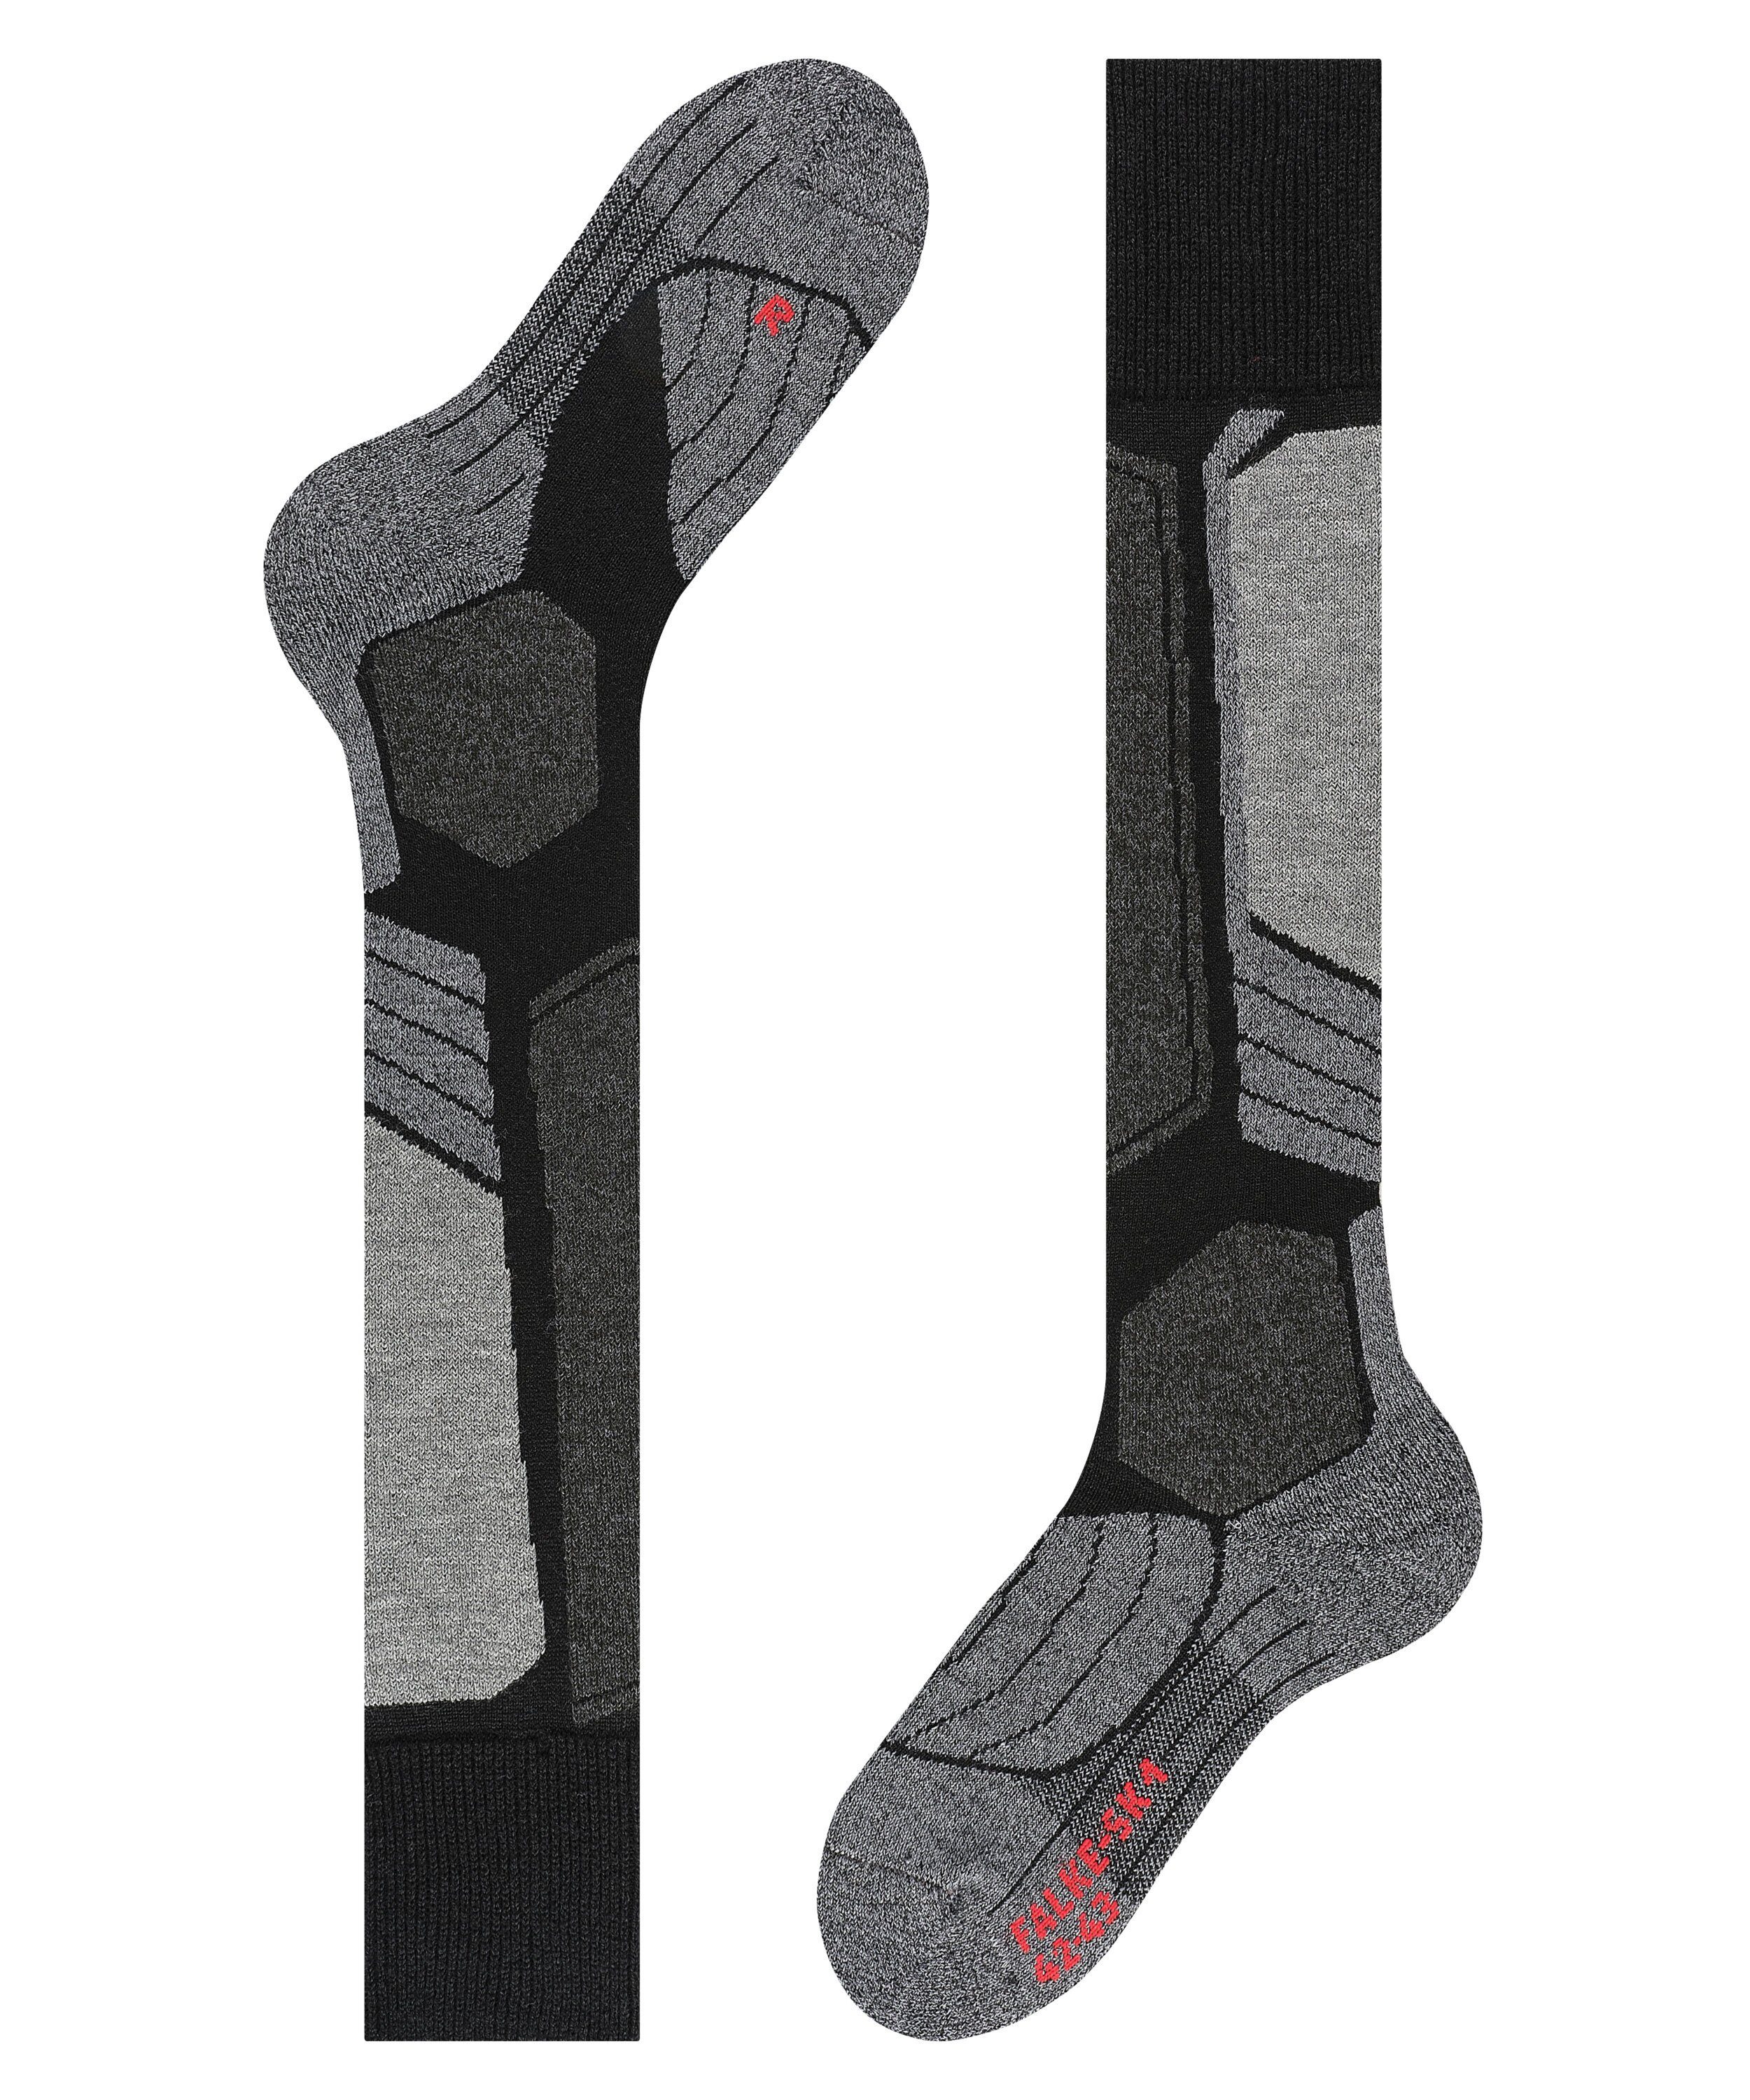 Komfort für black-mix Comfort Polsterung SK1 maximale (3010) hohen (1-Paar) FALKE Skisocken